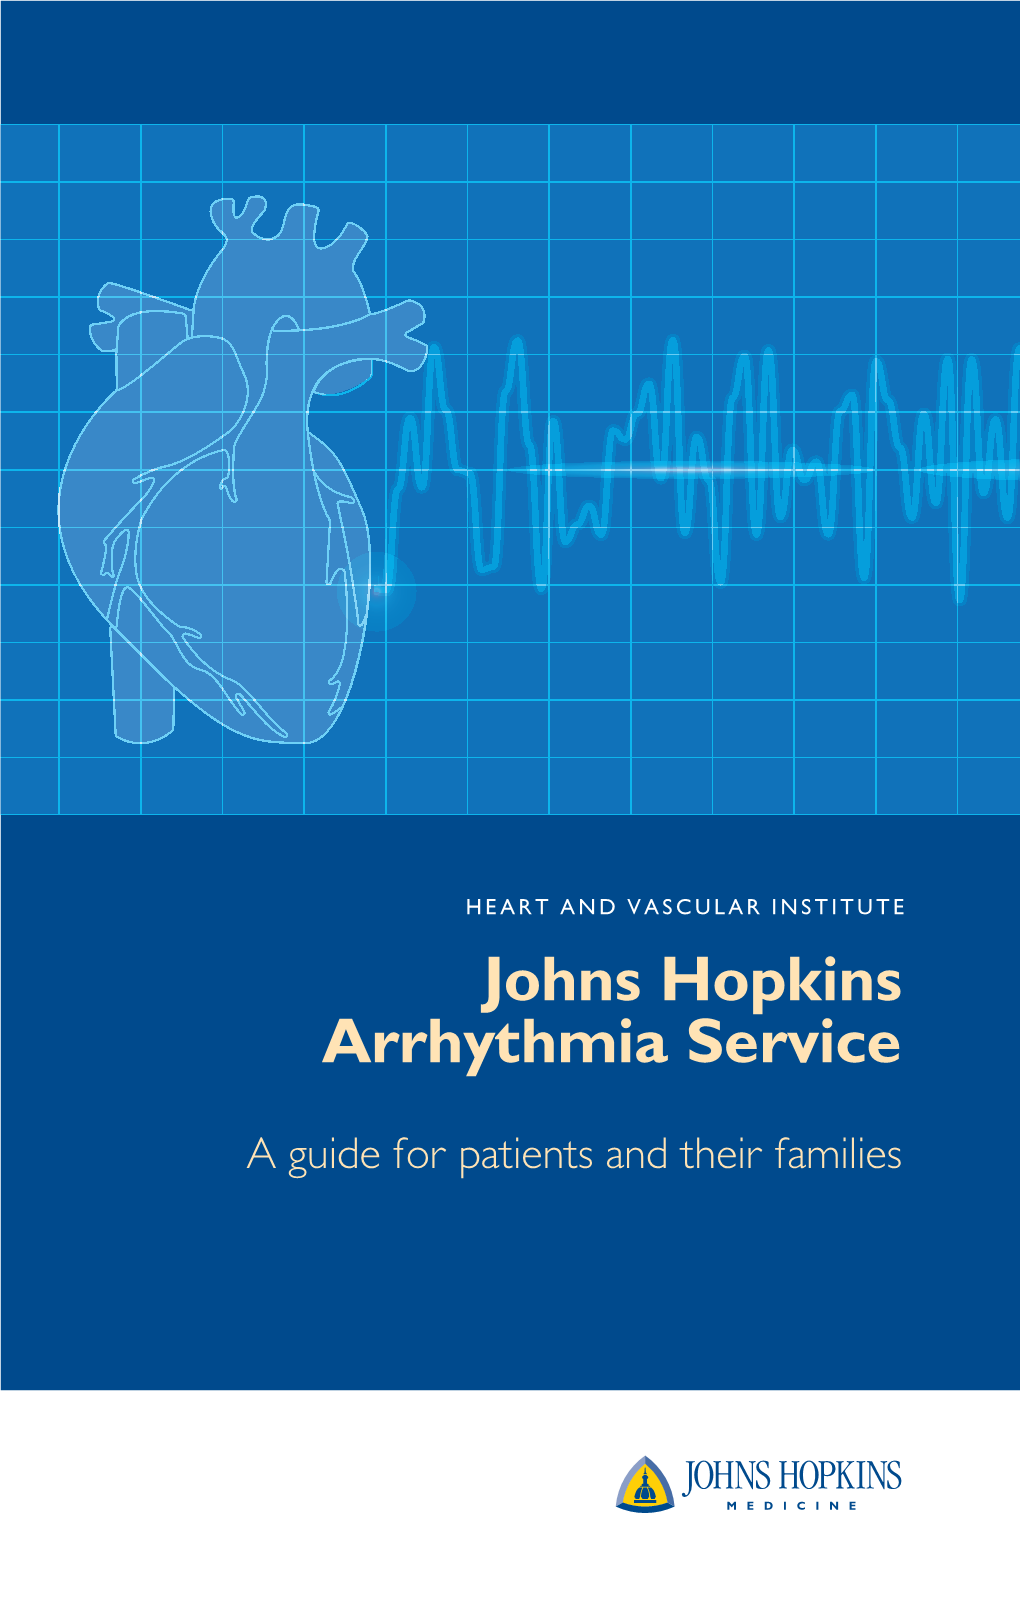 Johns Hopkins Arrhythmia Service